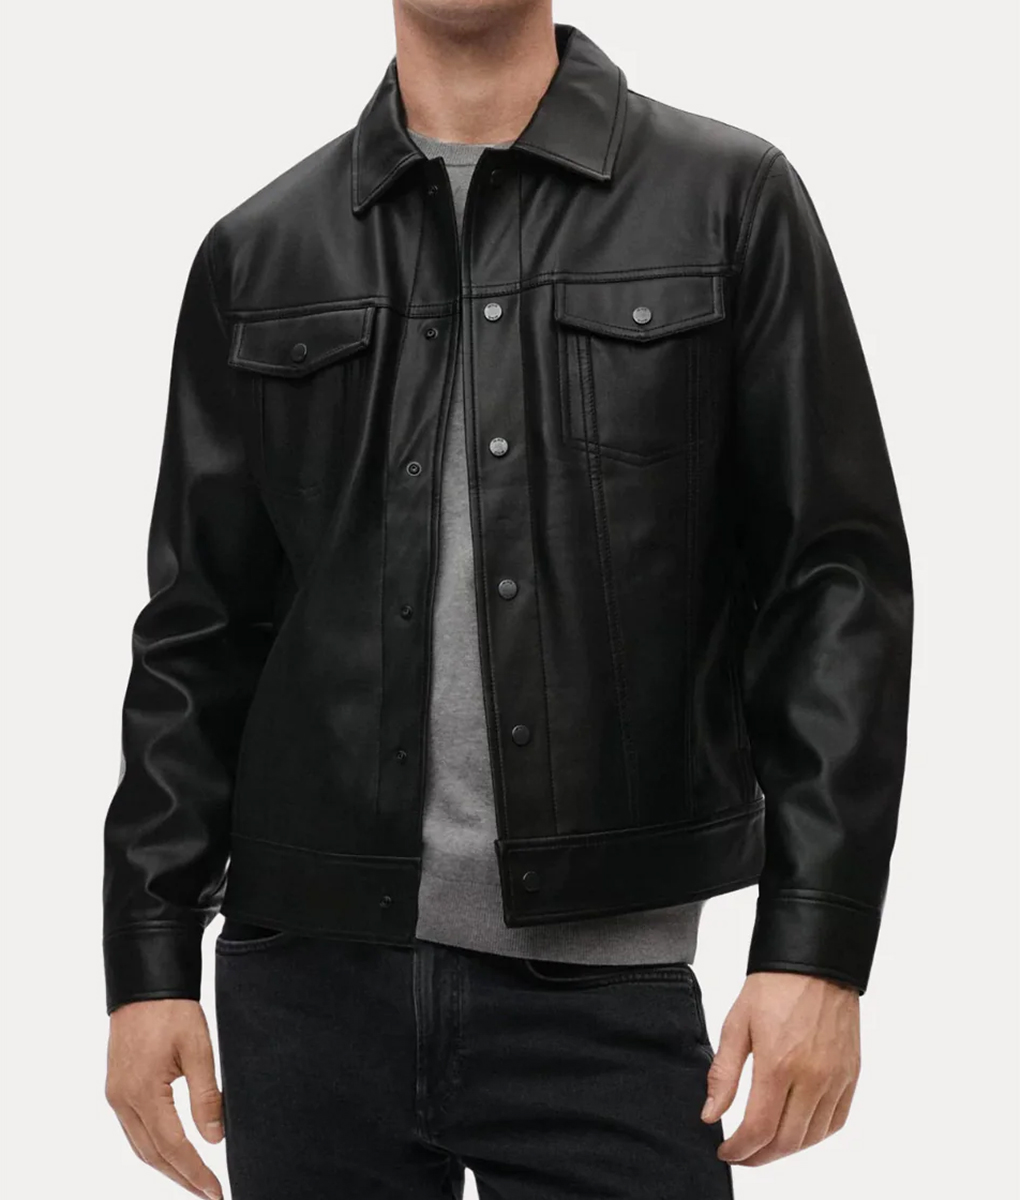 Brad Simon Sex/Life S02 Leather Jacket